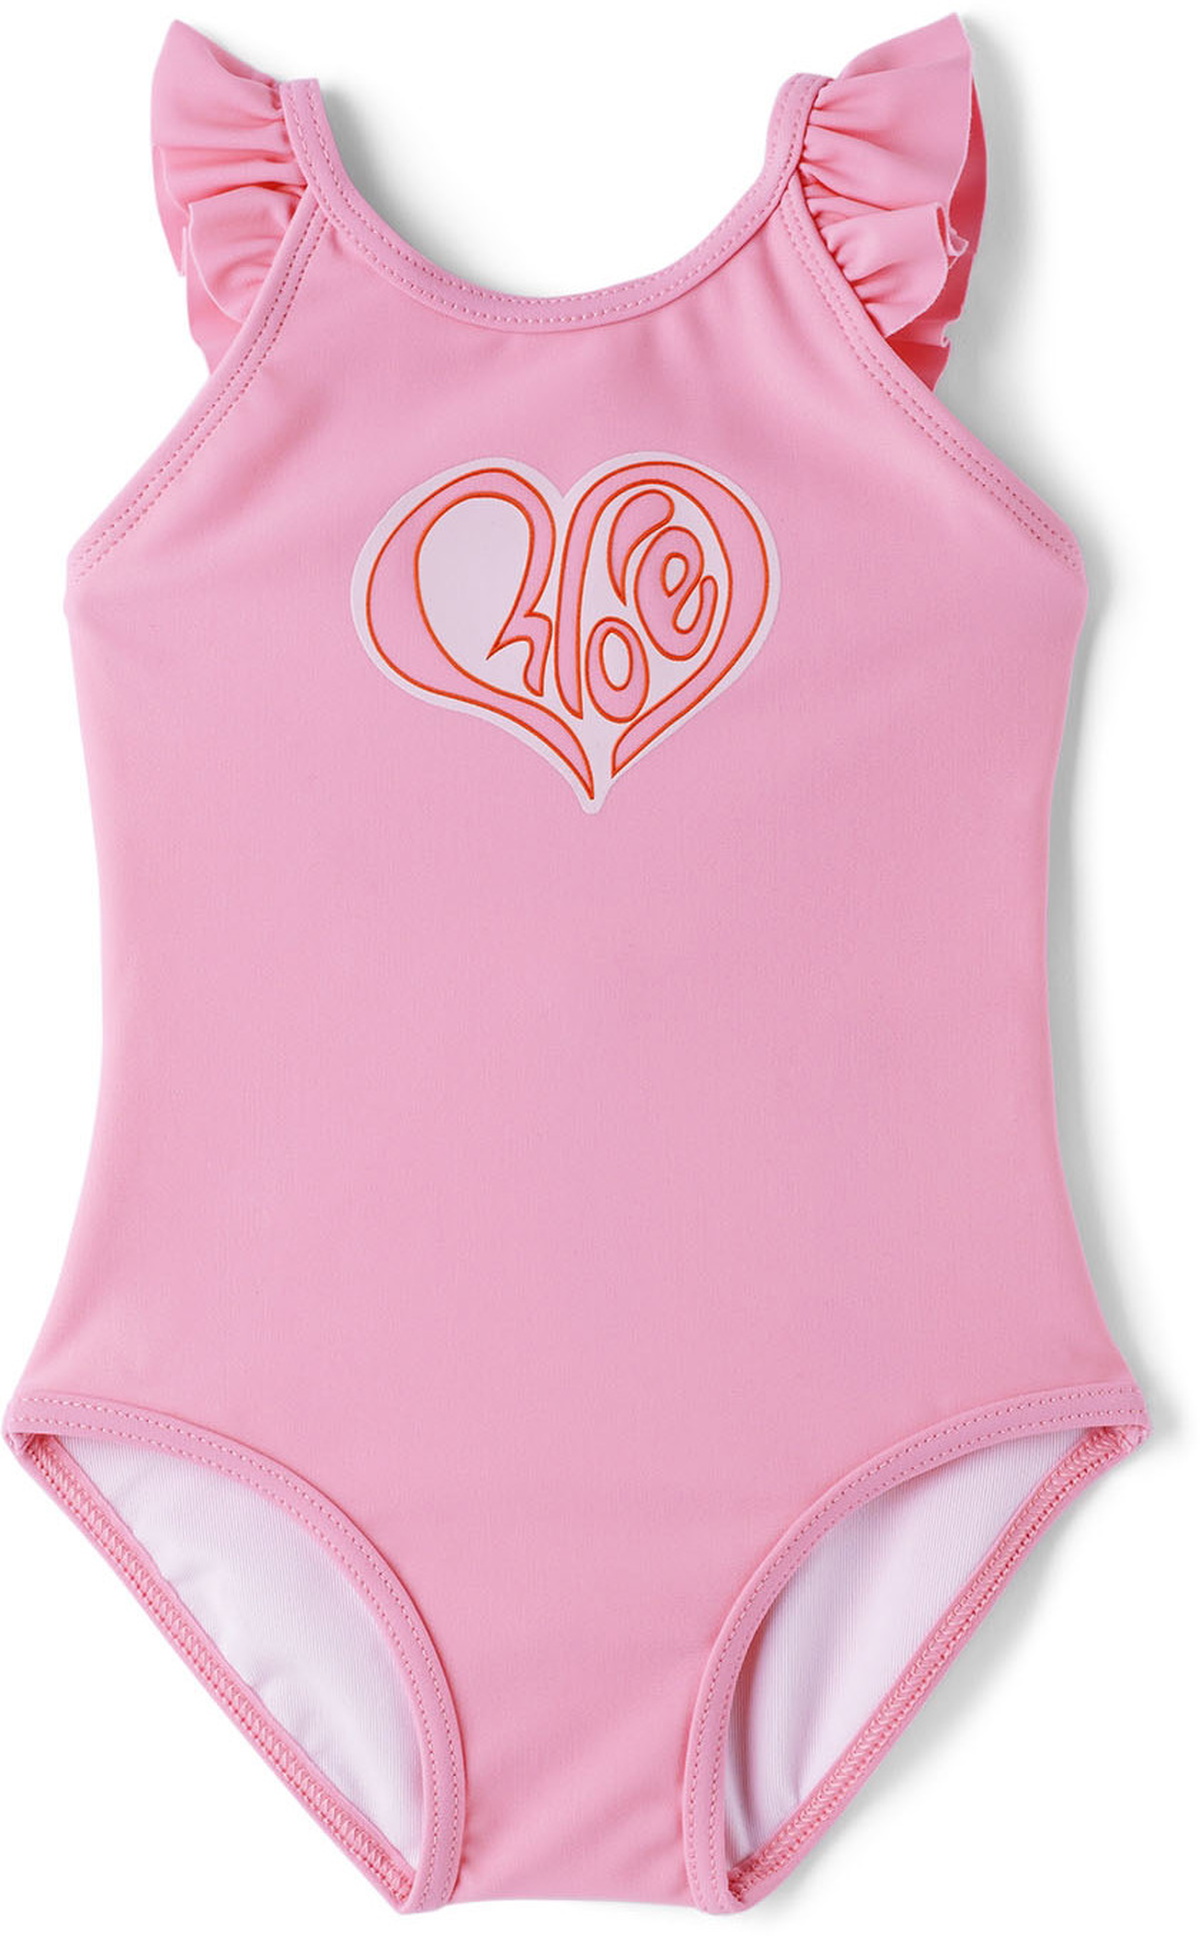 Chloé Baby Pink Heart Logo One-Piece Swimsuit Chloe